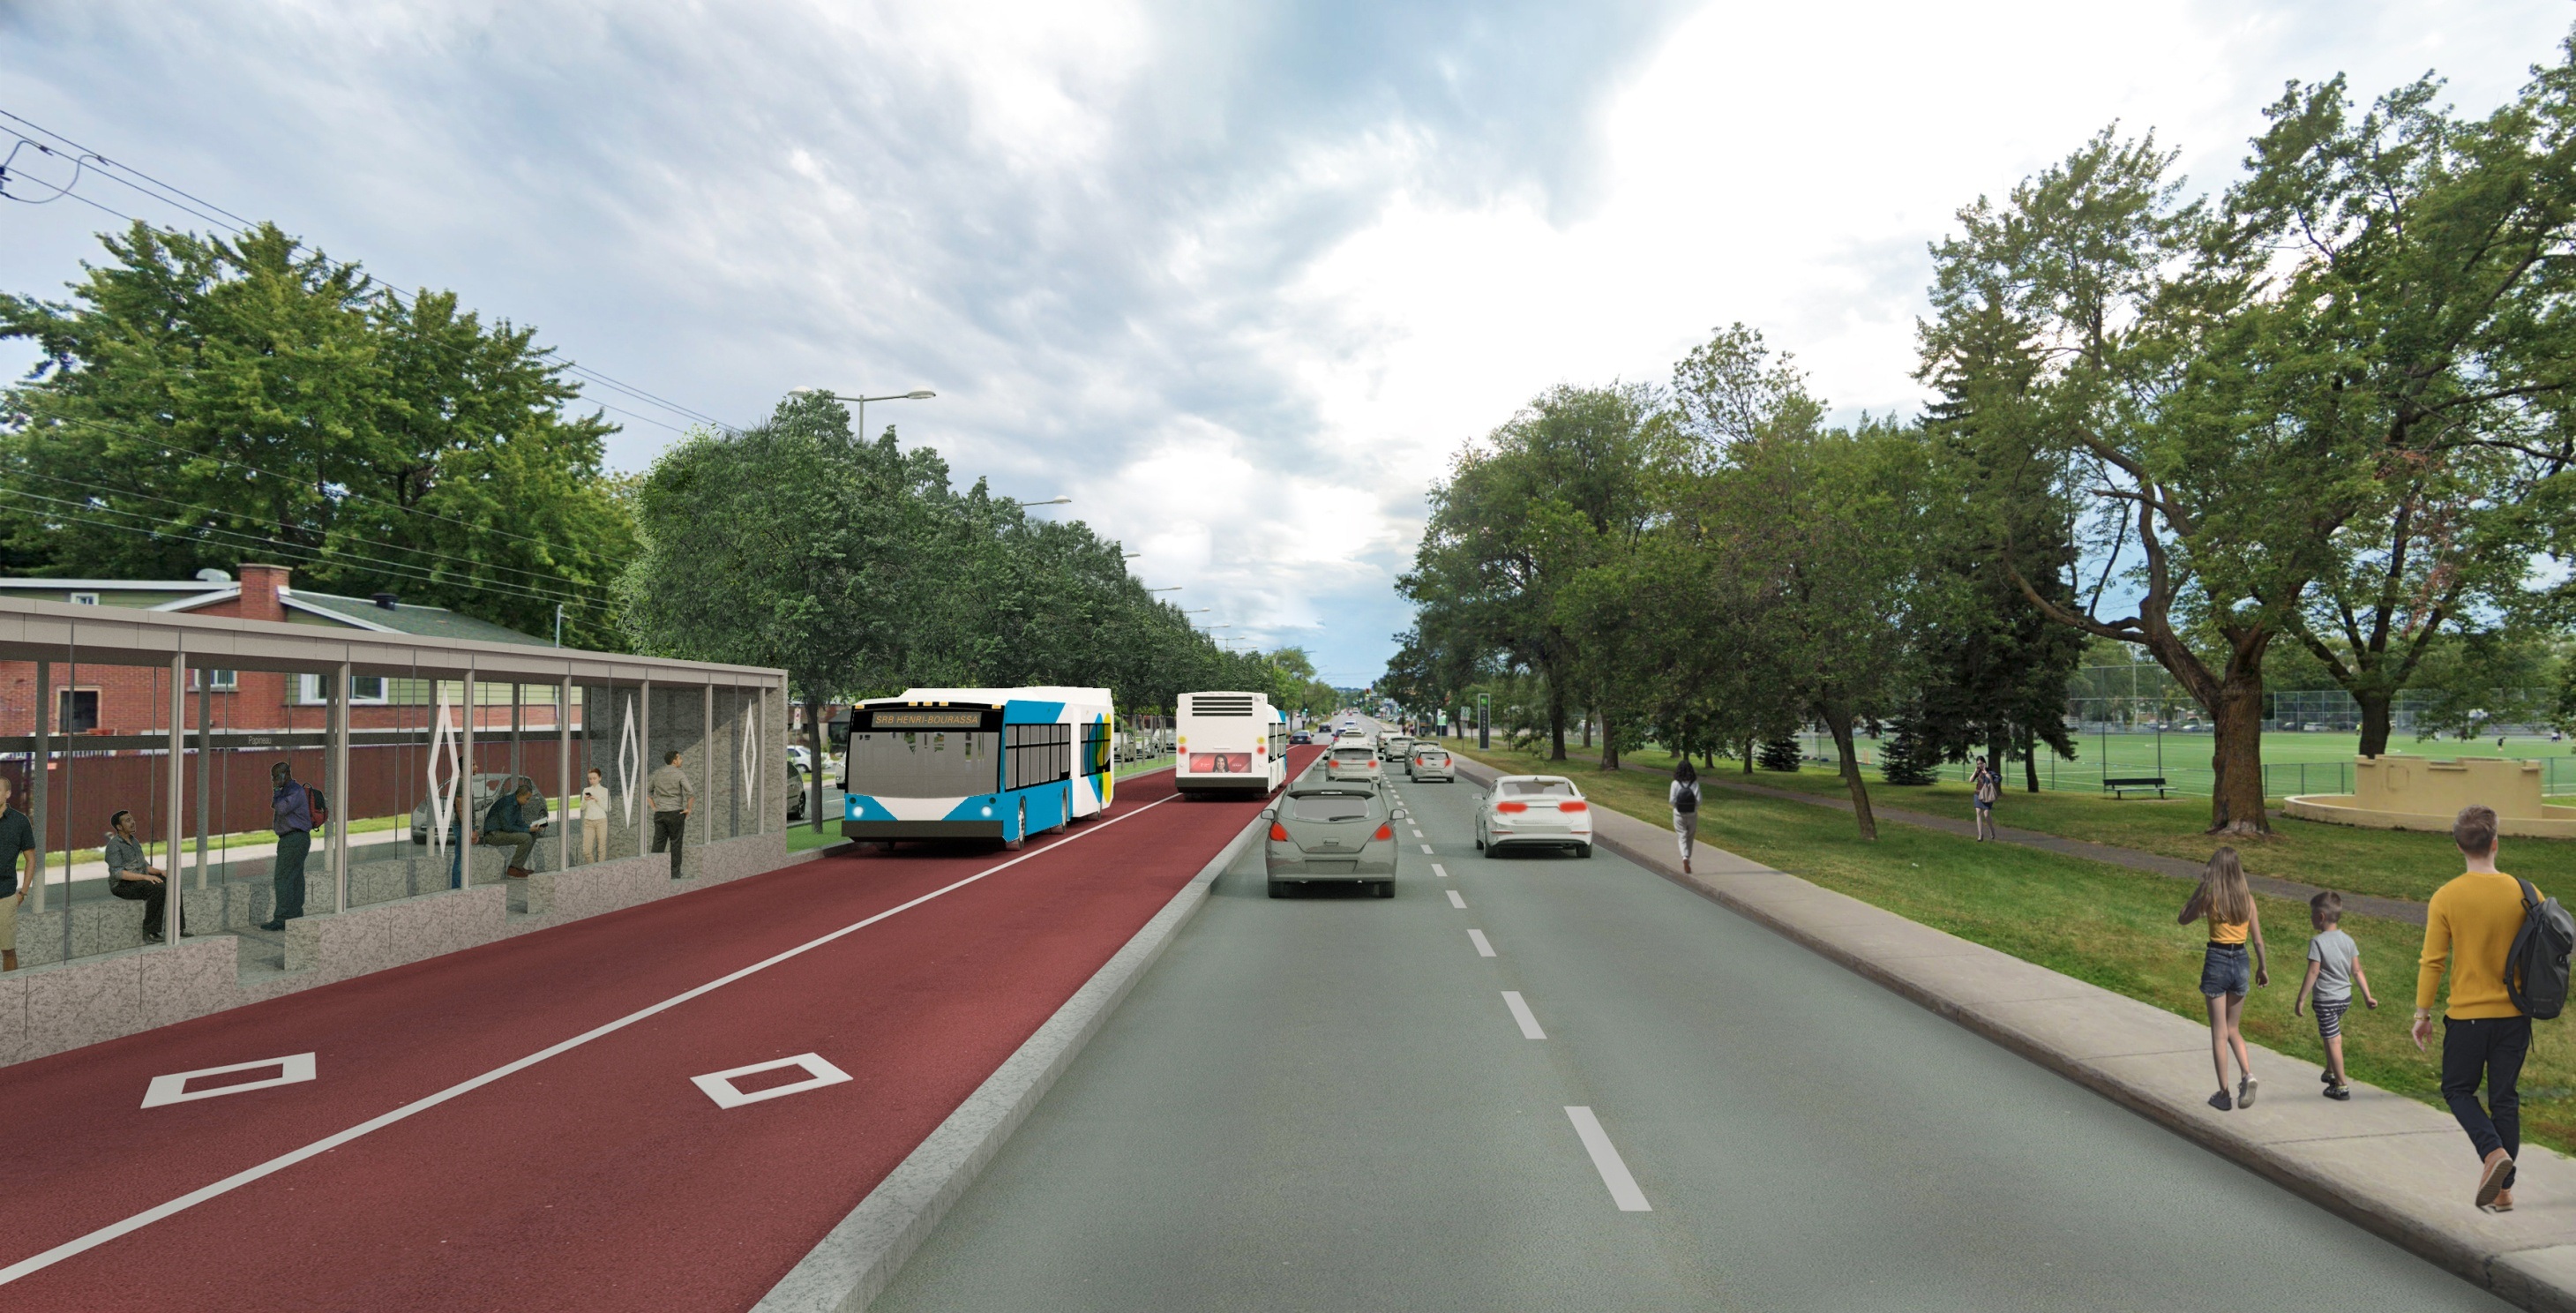 Projet Montréal announces a structuring mobility option for the north of the island of Montréal: the Henri-Bourassa Metrobus